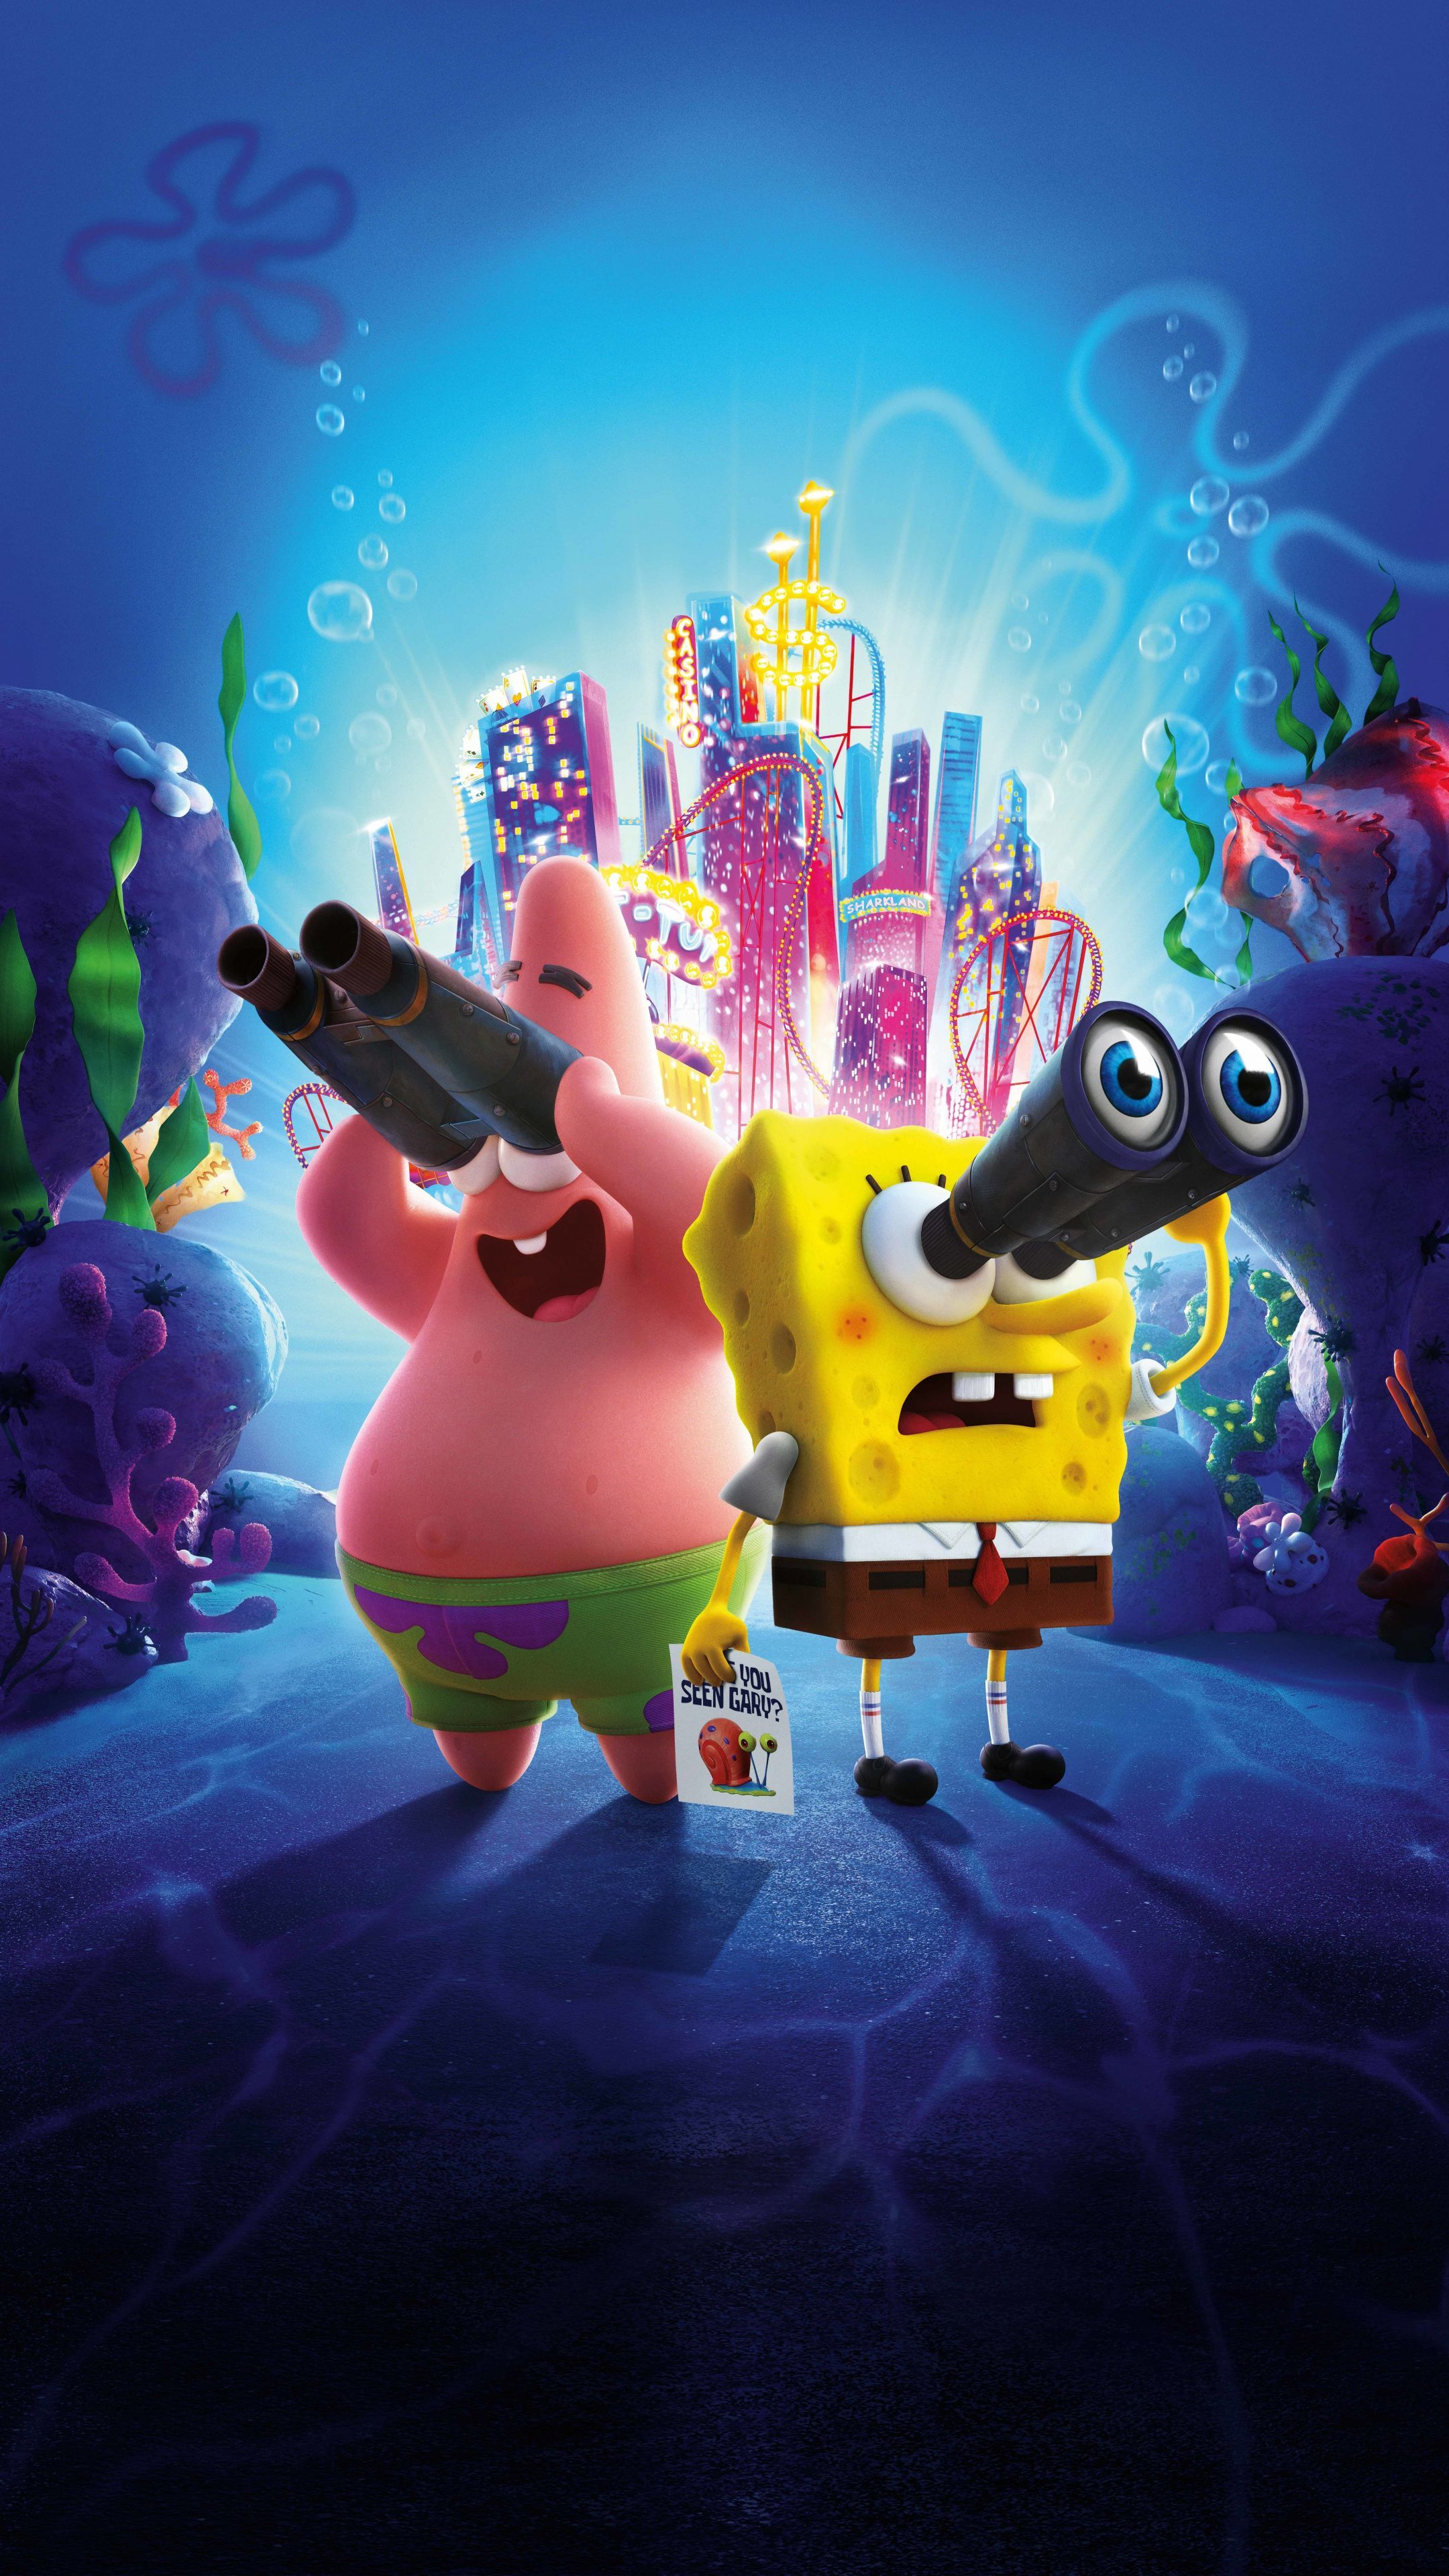 2160x3840 The SpongeBob Movie: Sponge on the Run, 2020 movie wallpapers in 2020